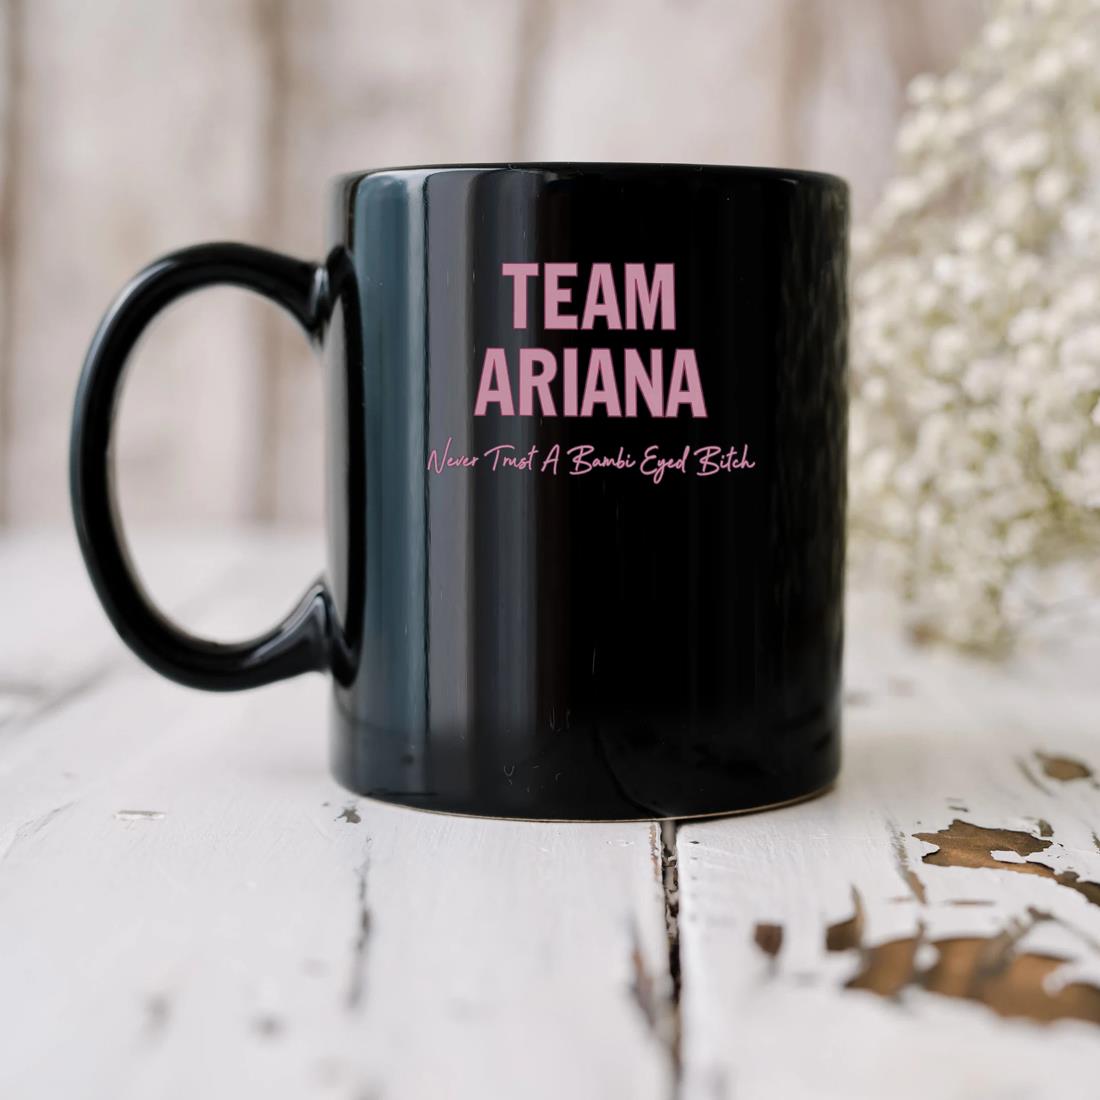 Team Ariana Never Trust A Bambi Eyed Bitch Mug